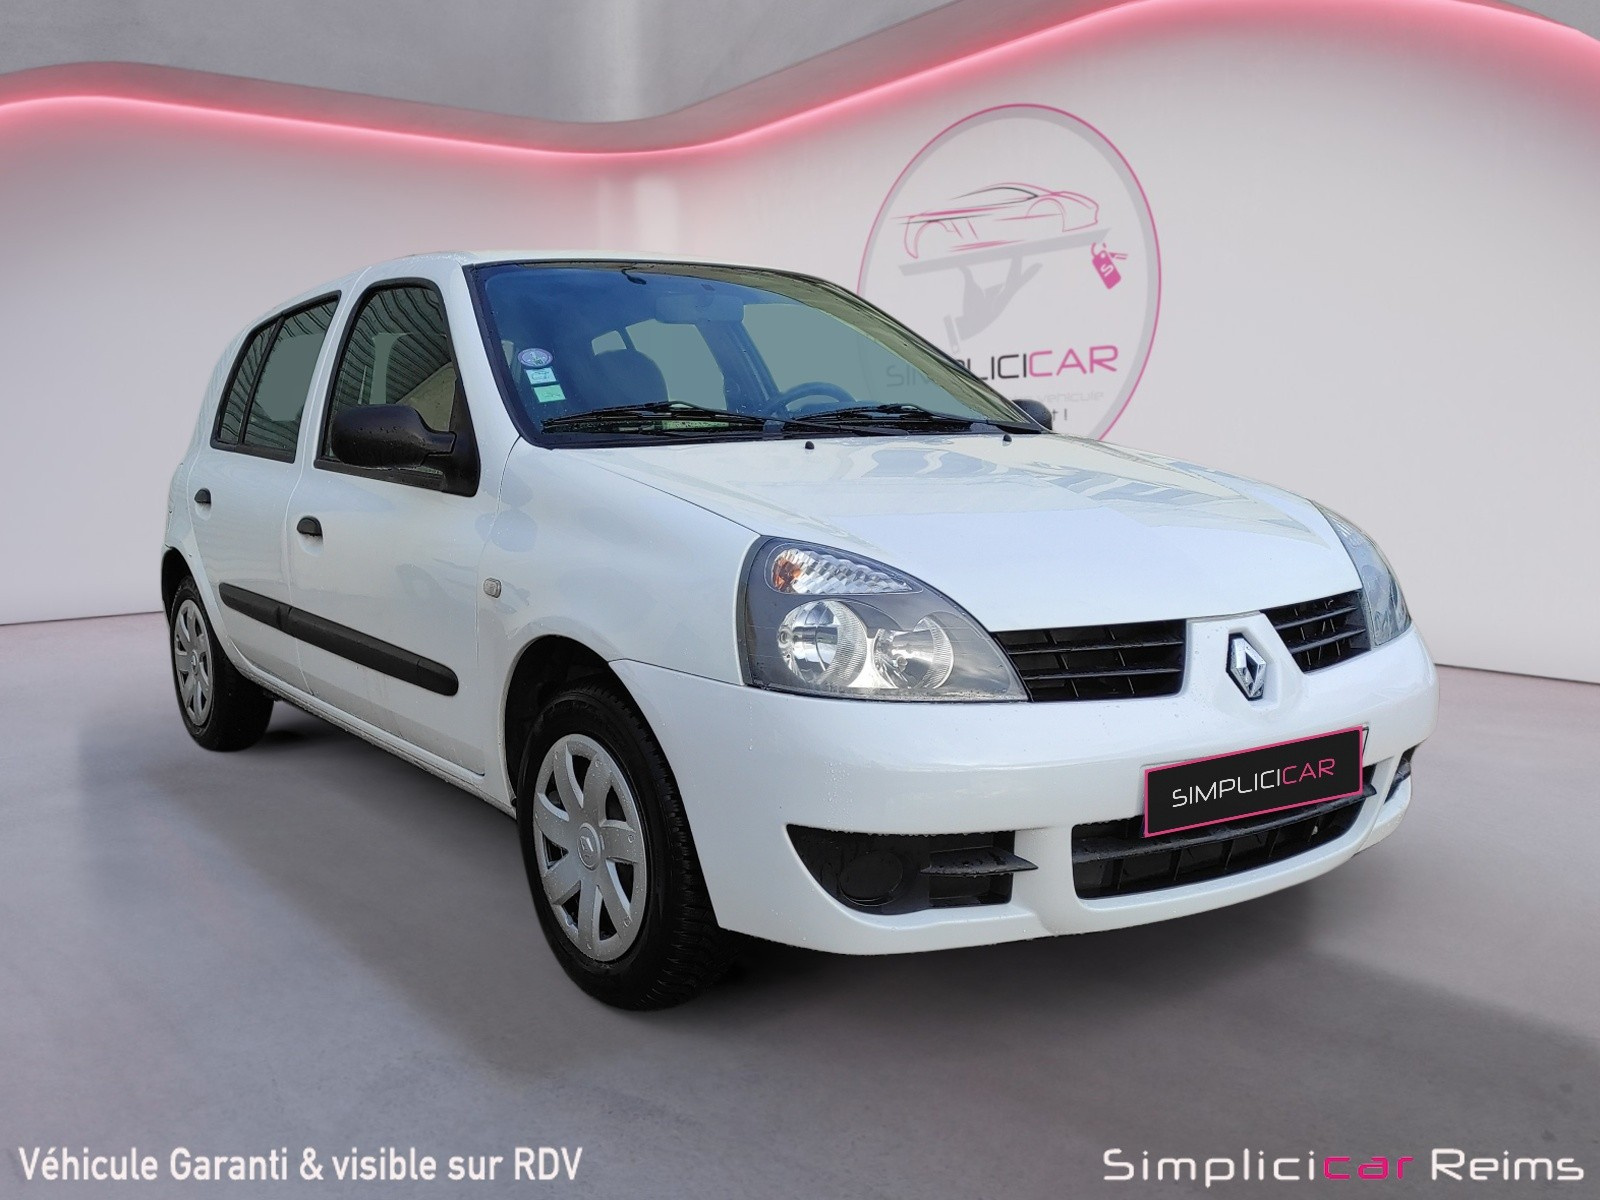 Renault Clio II clio 1.2 gpl occasion : annonces achat, vente de voitures